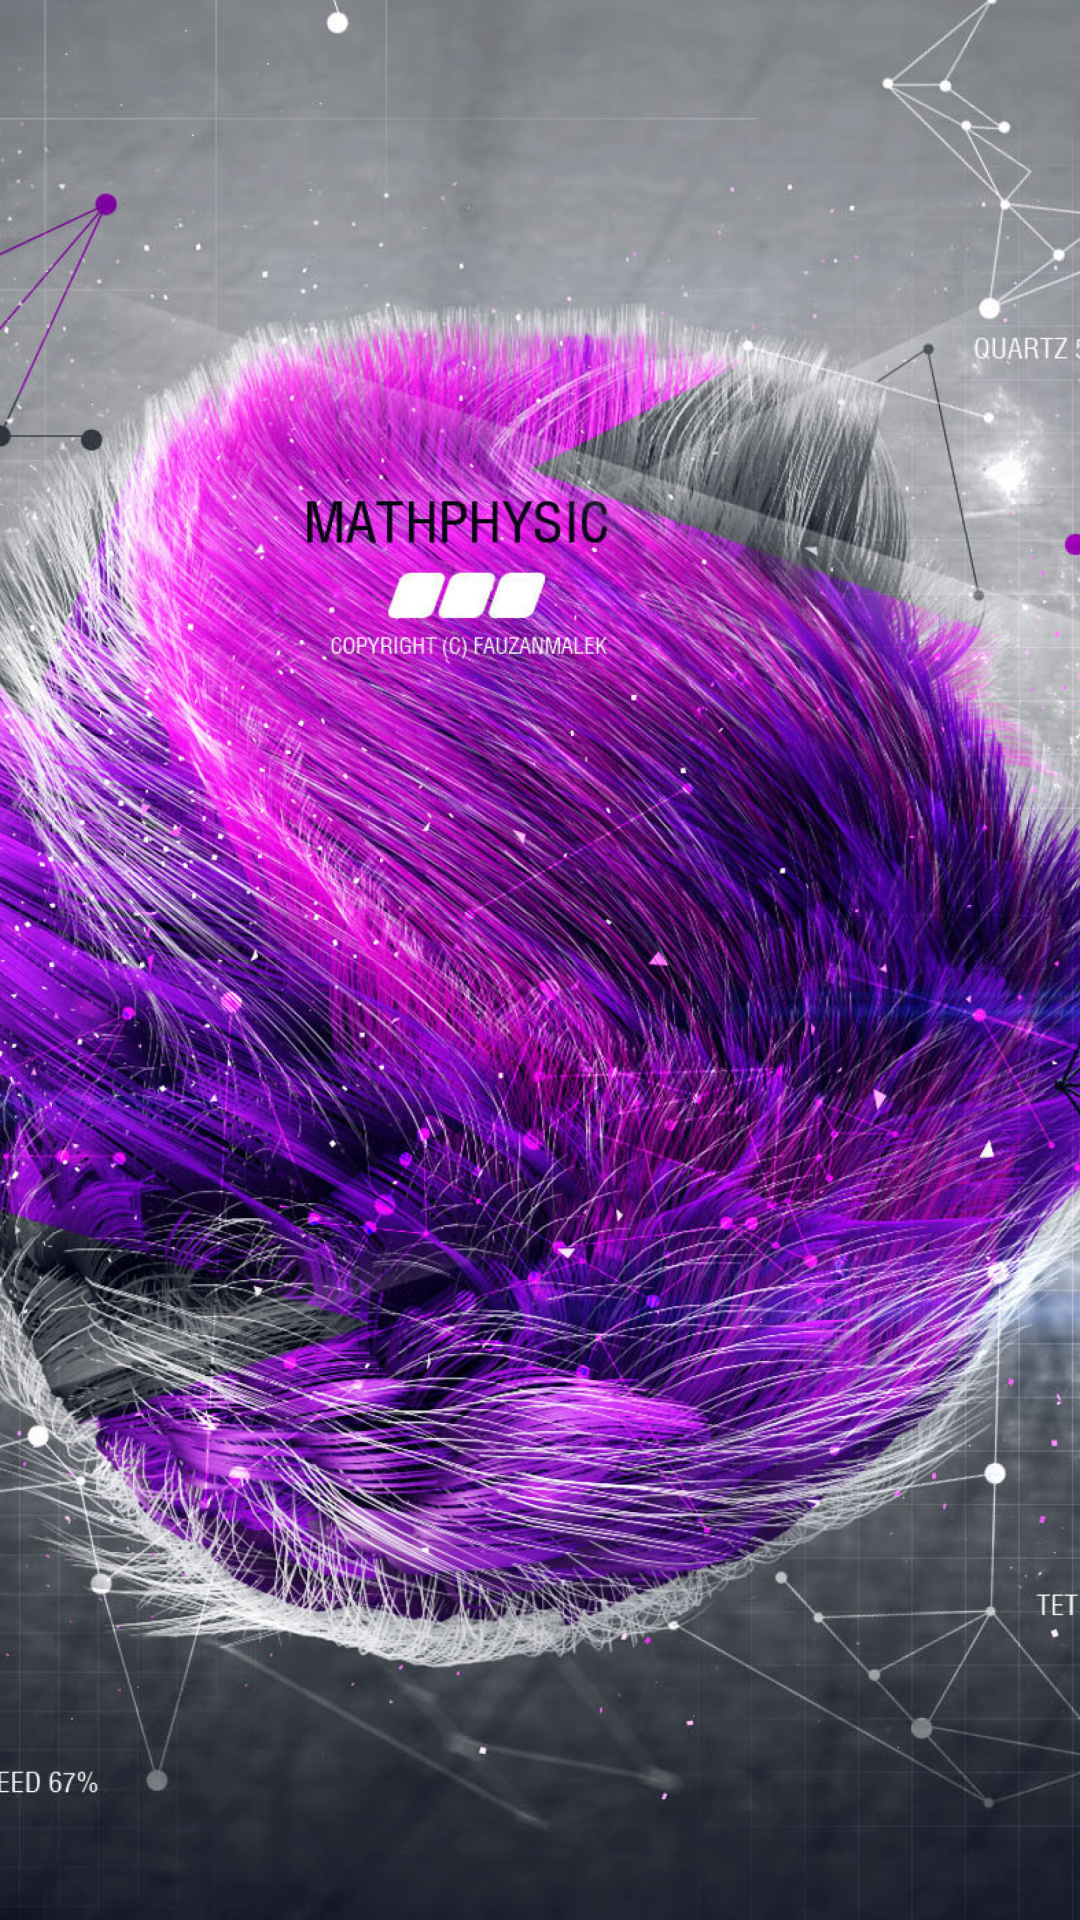 Mathphysic wallpaper 1080x1920